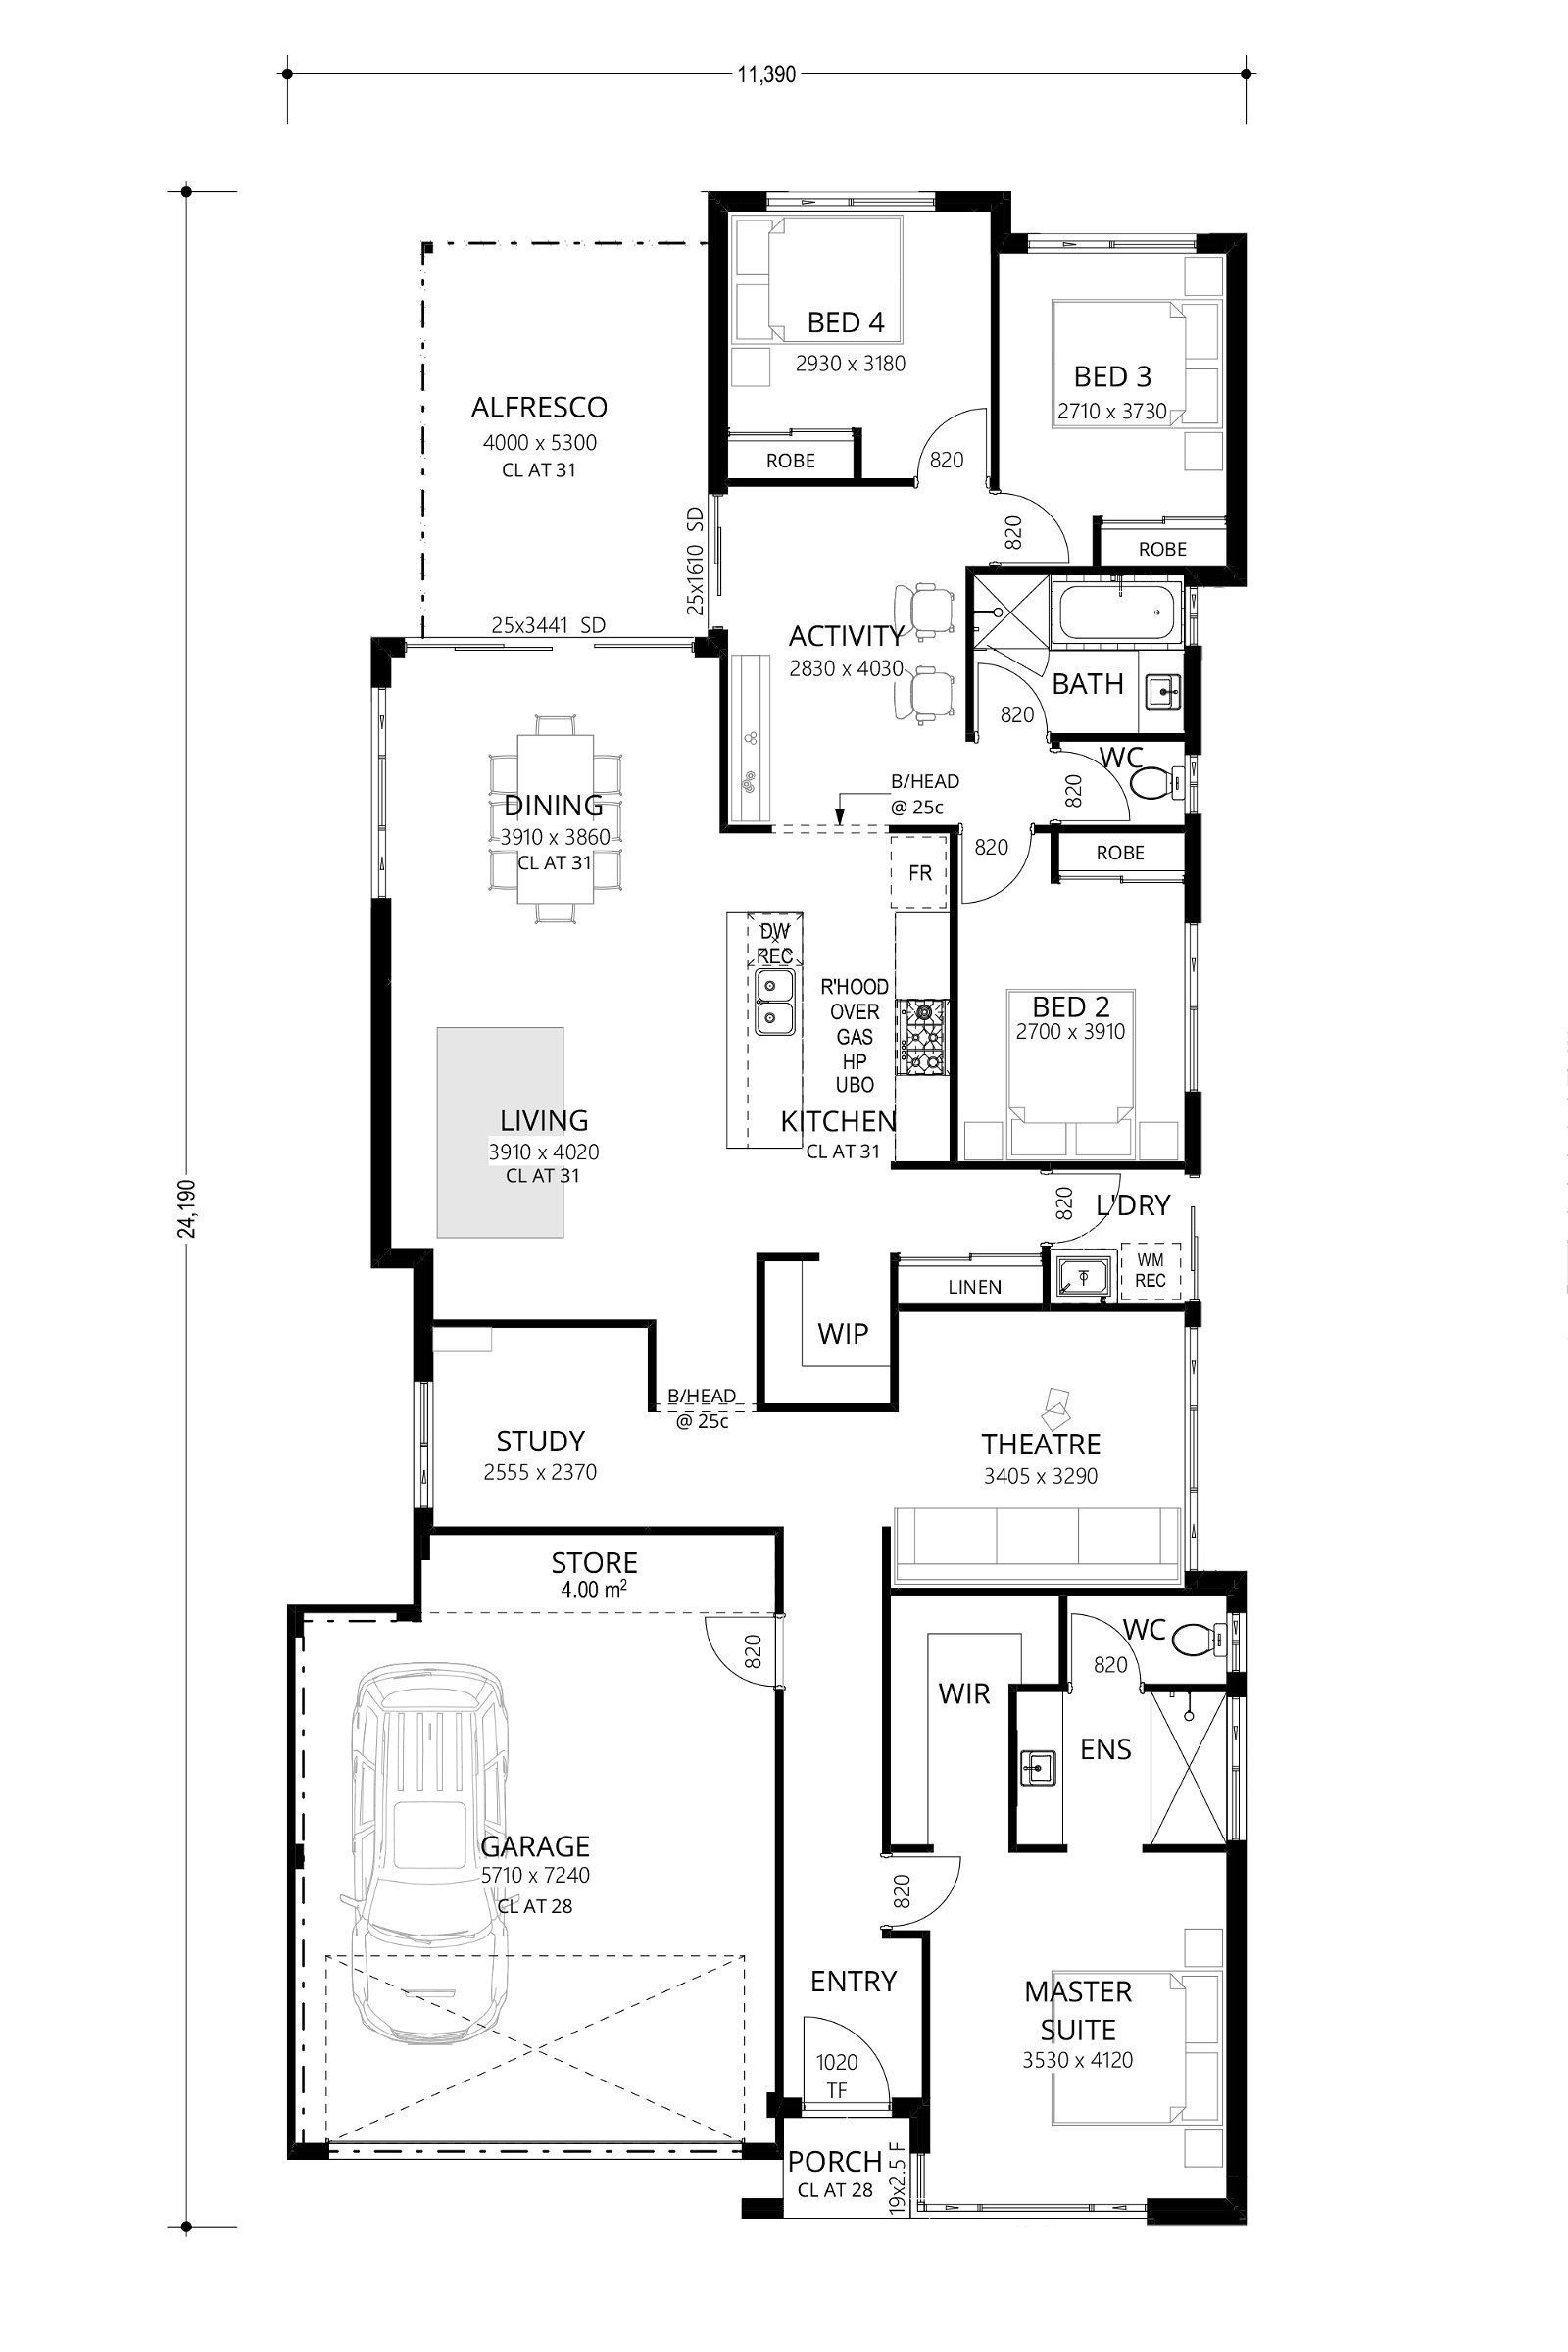 Residential Attitudes - Manor Of Fact - Floorplan - Manor Of Fact Floorplan Website